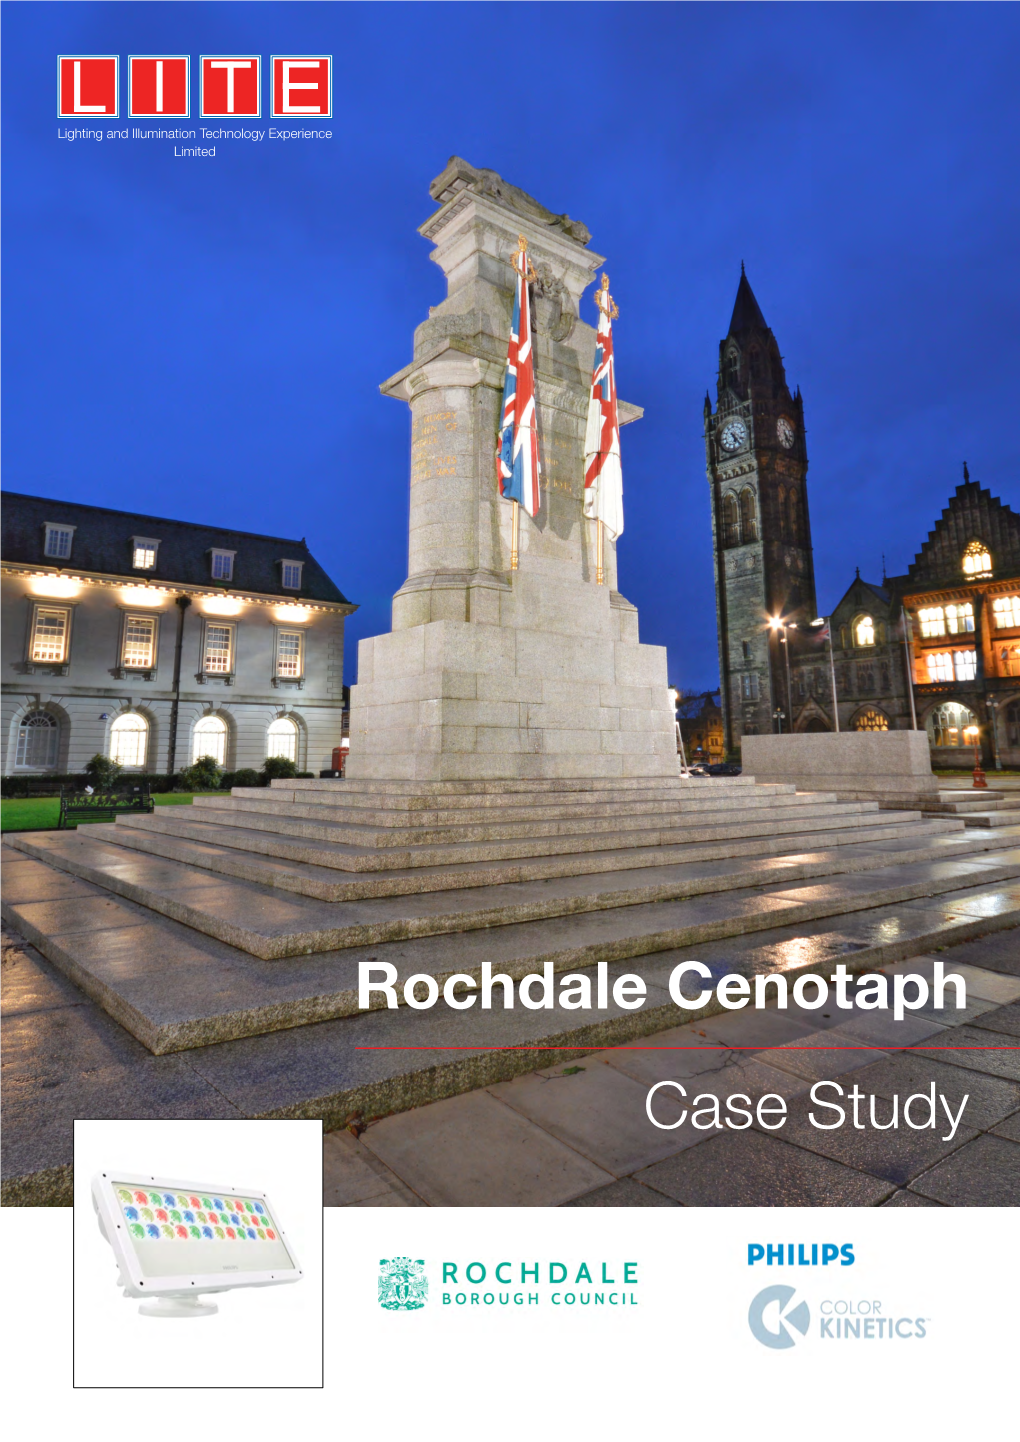 Rochdale Cenotaph Case Study Information